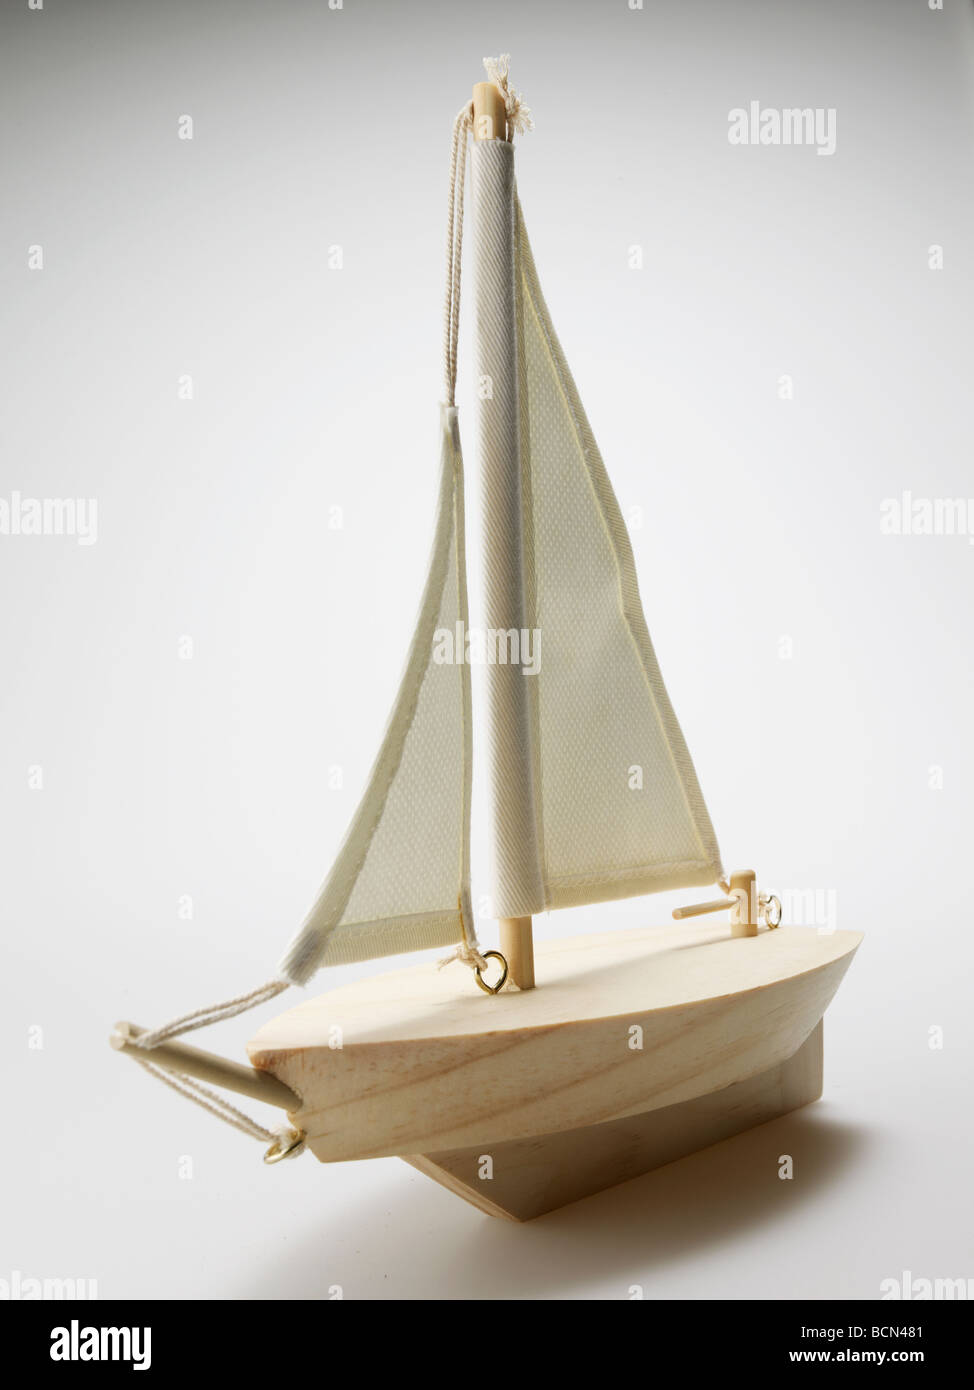 Wooden Model Ship Stock Photo